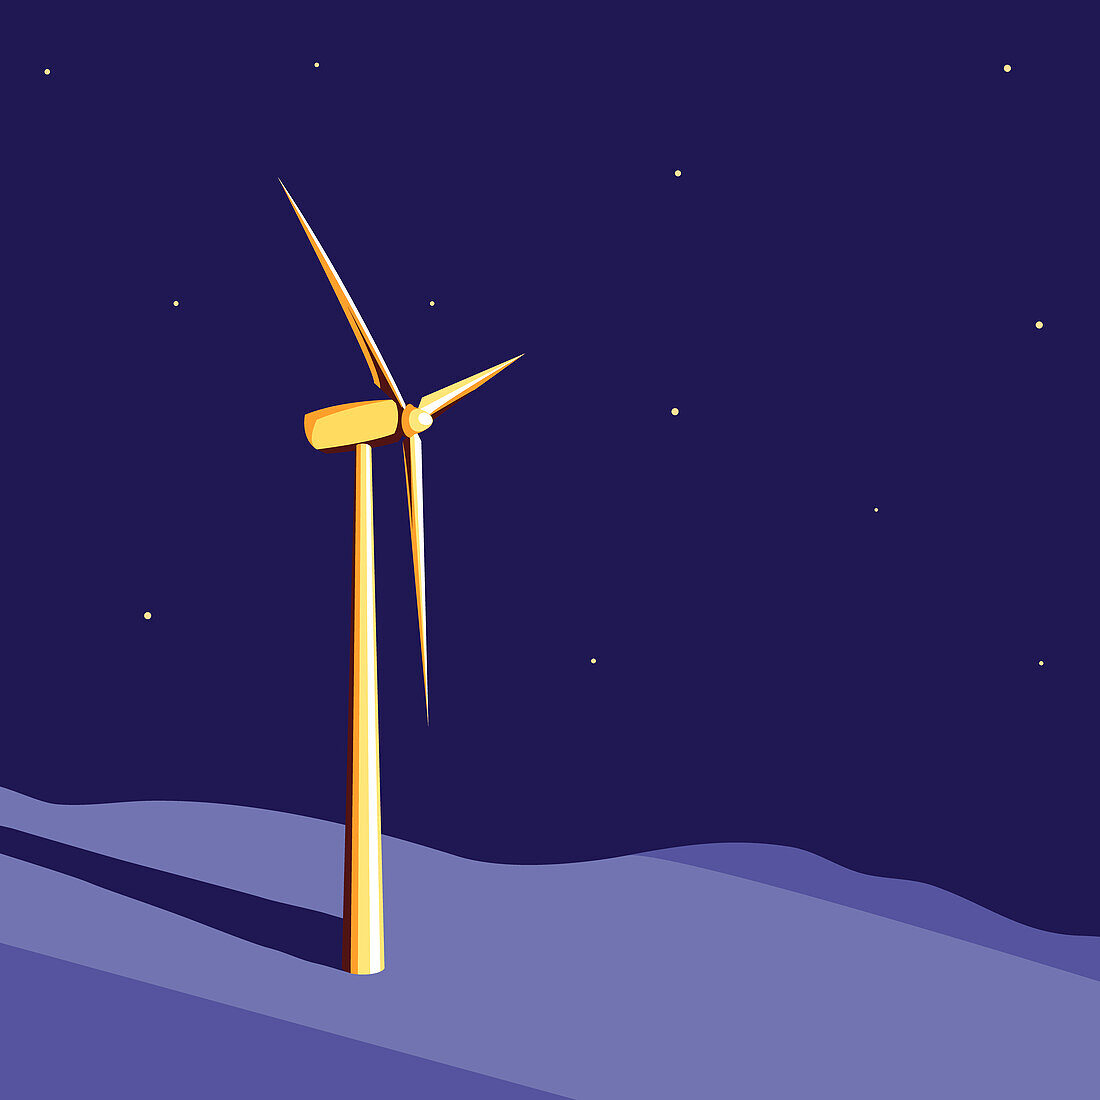 Renewable energy, conceptual illustration